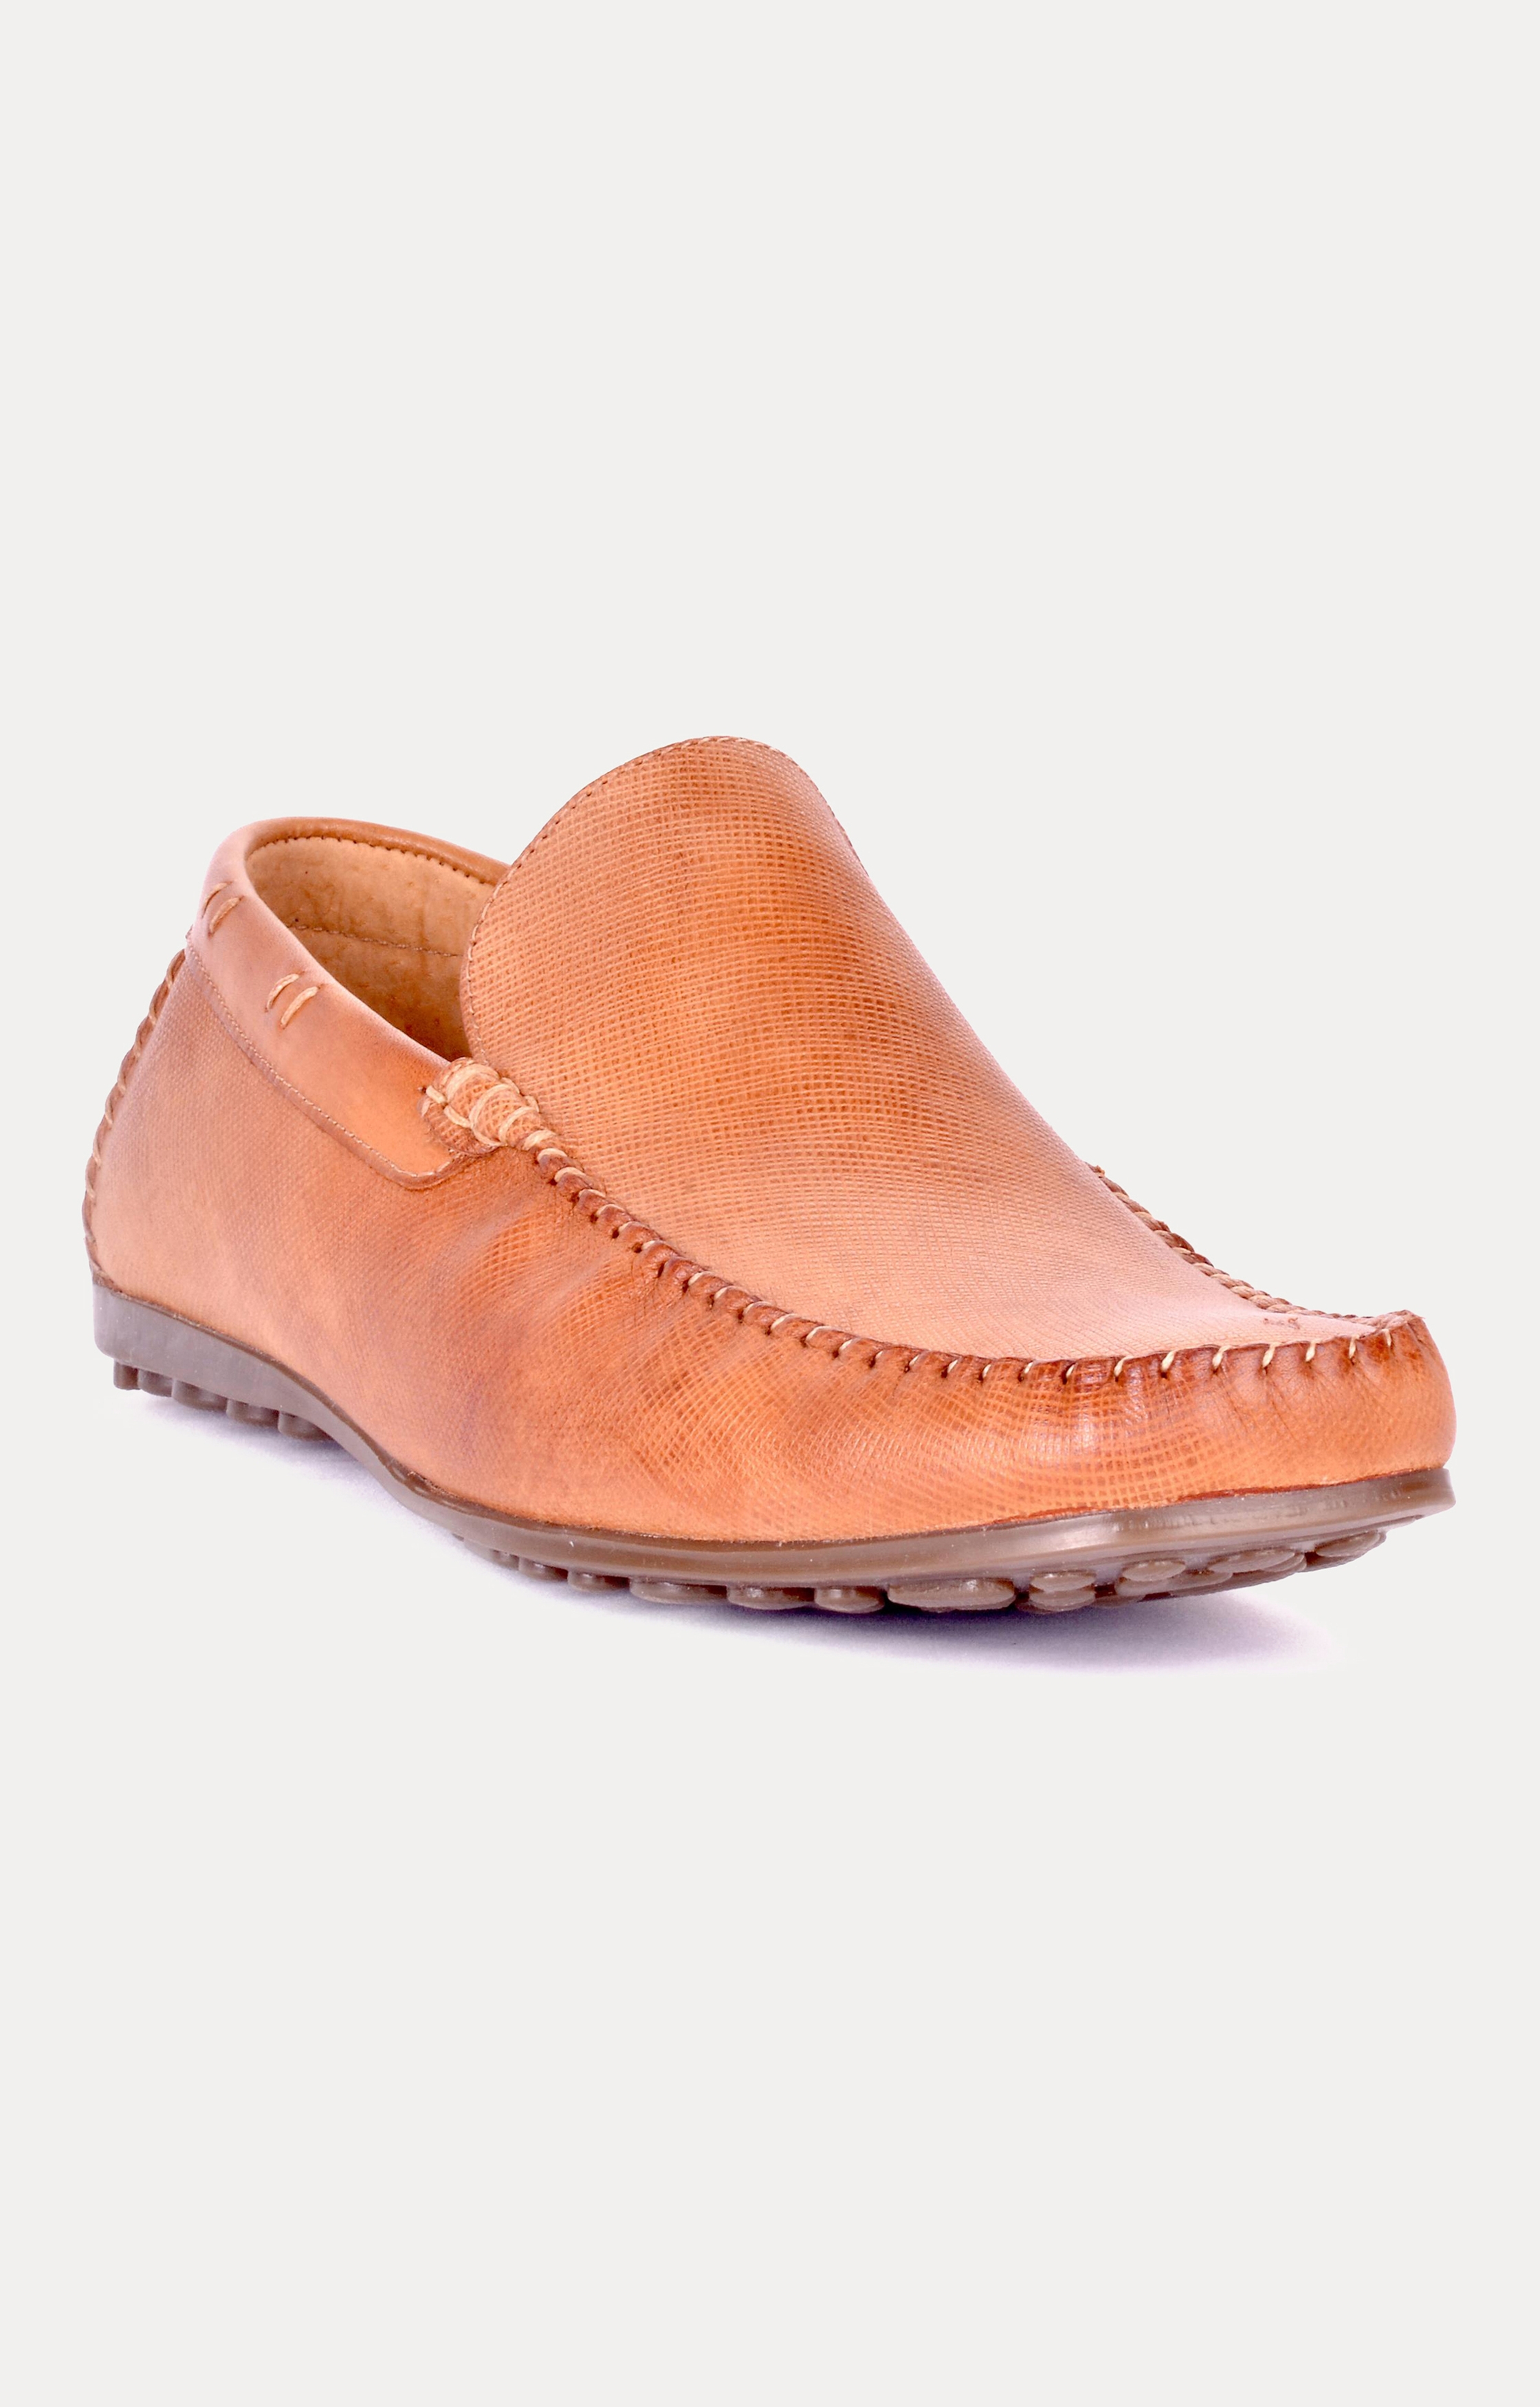 Perkens Brown Boat Shoes